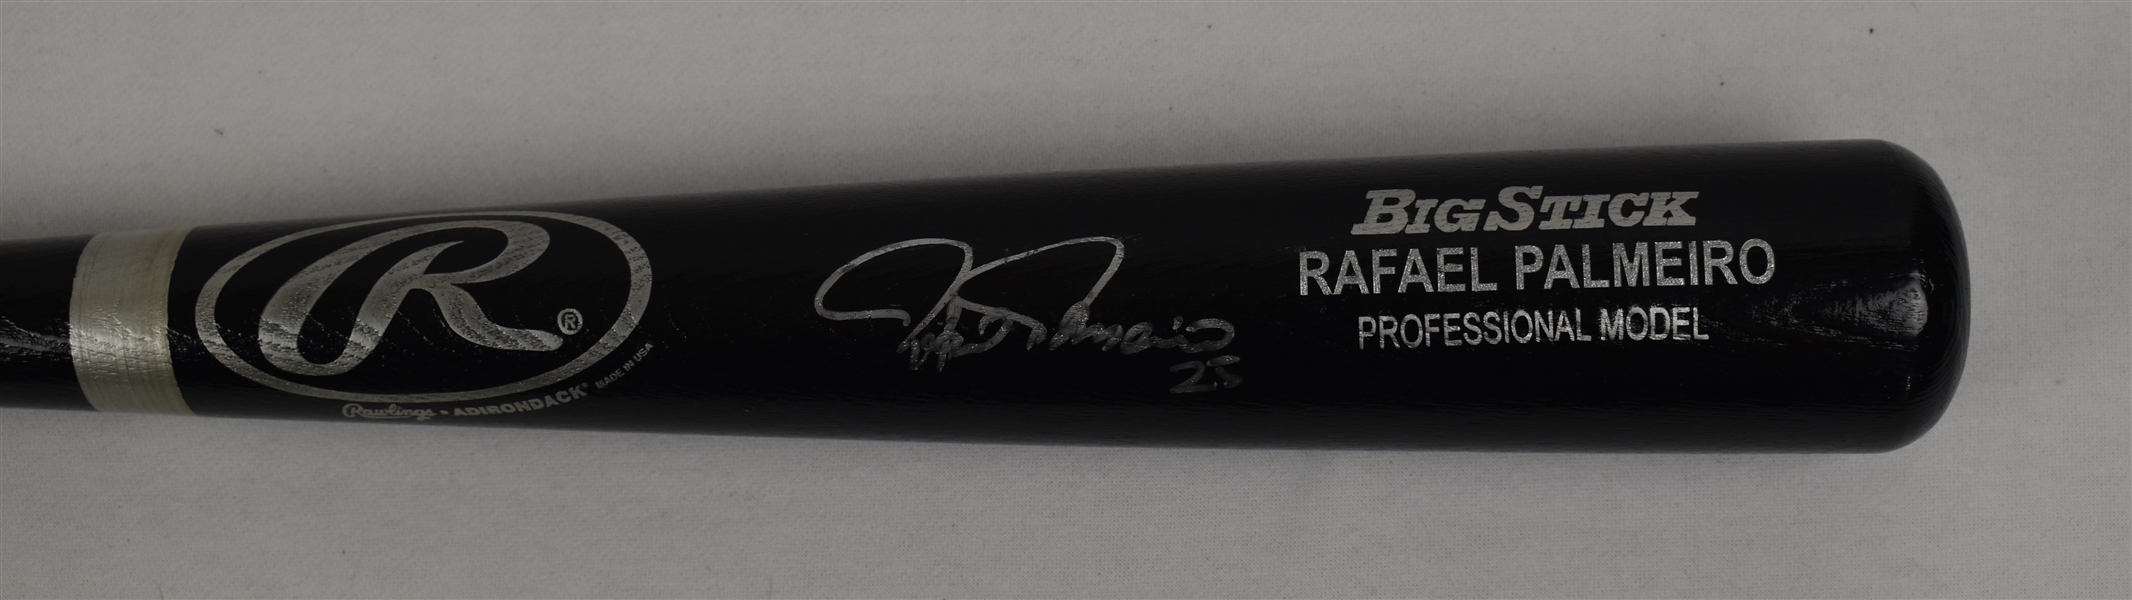 Rafael Palmeiro Autographed Bat